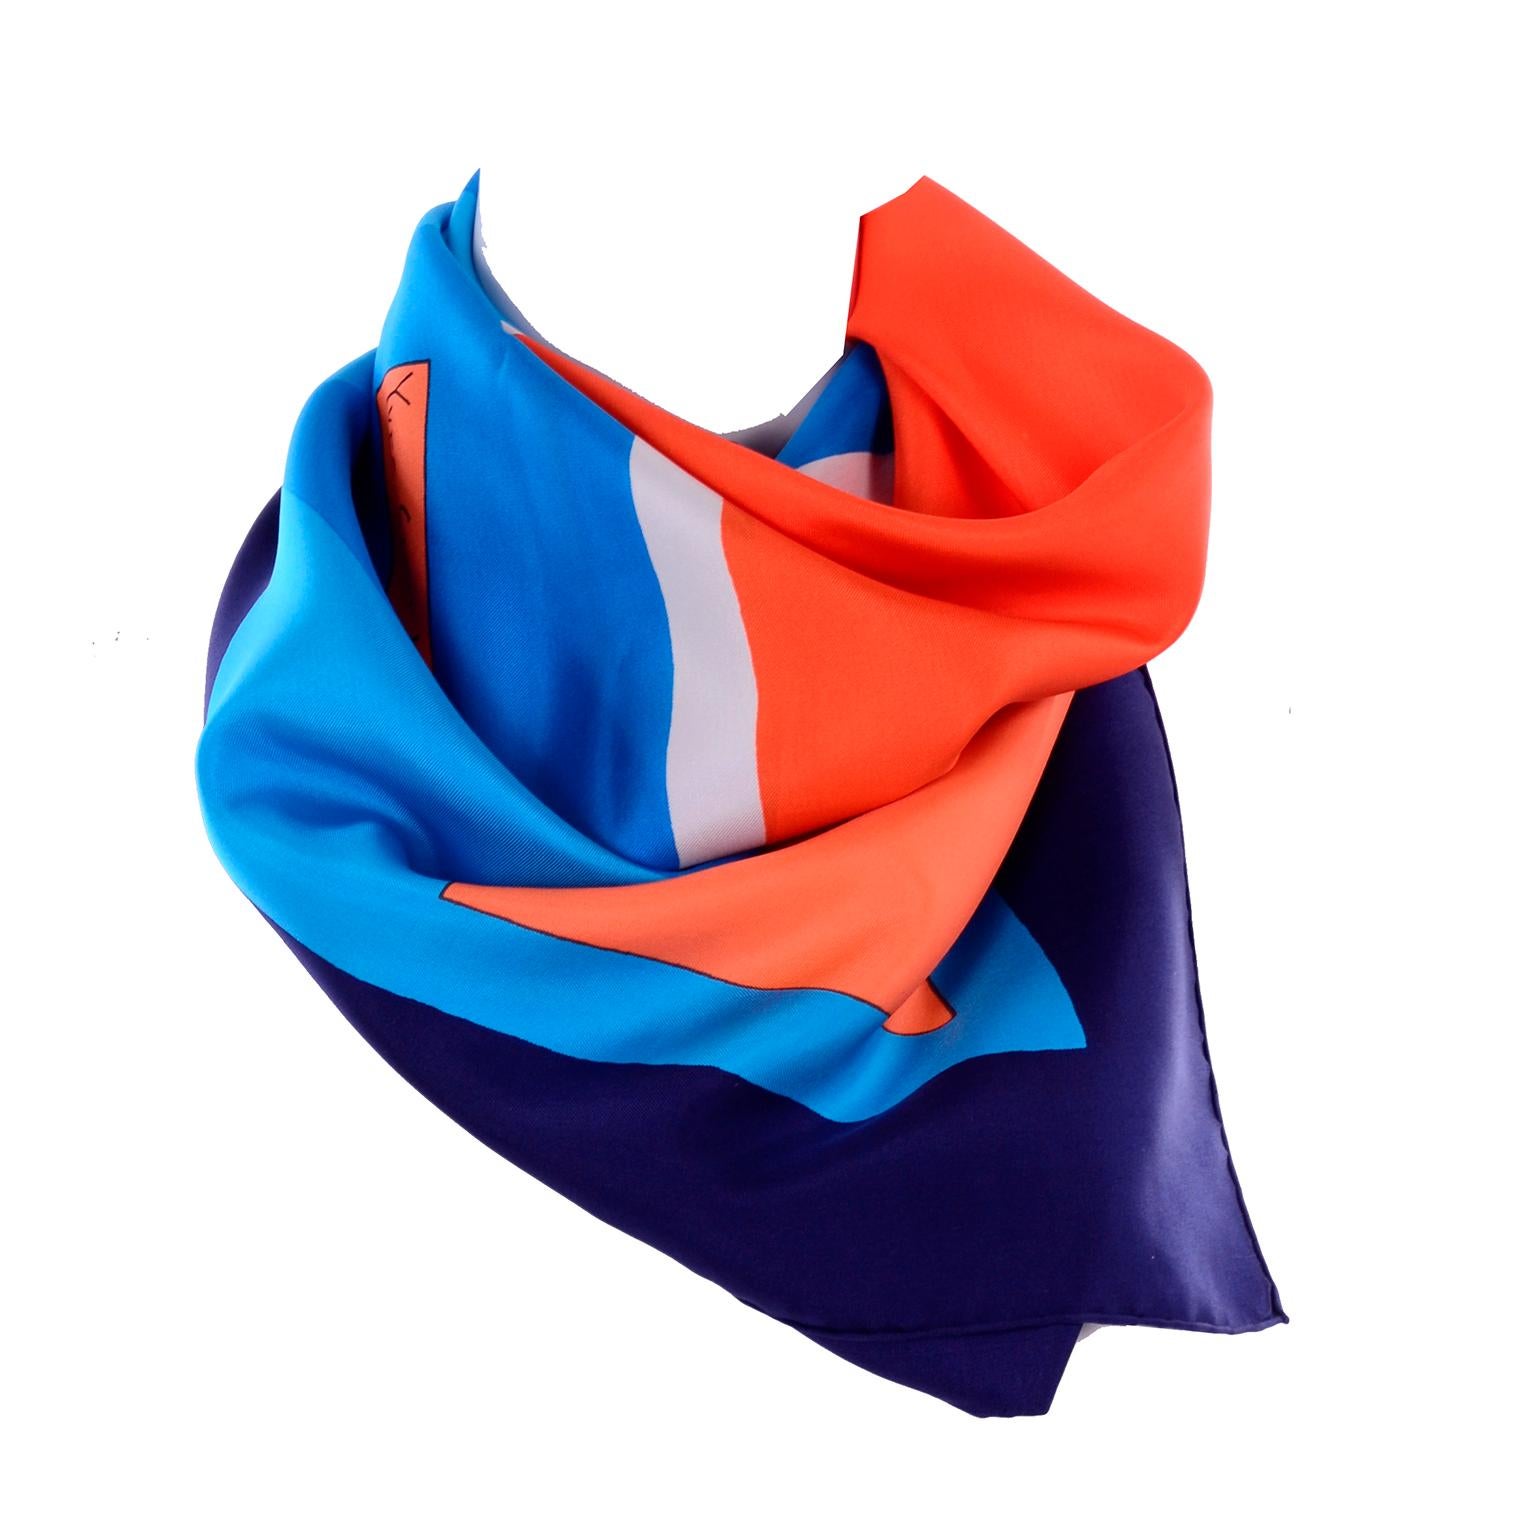 Women's or Men's YSL Yves Saint Laurent Vintage Silk Scarf in Bold Colorful Blue & Orange Print